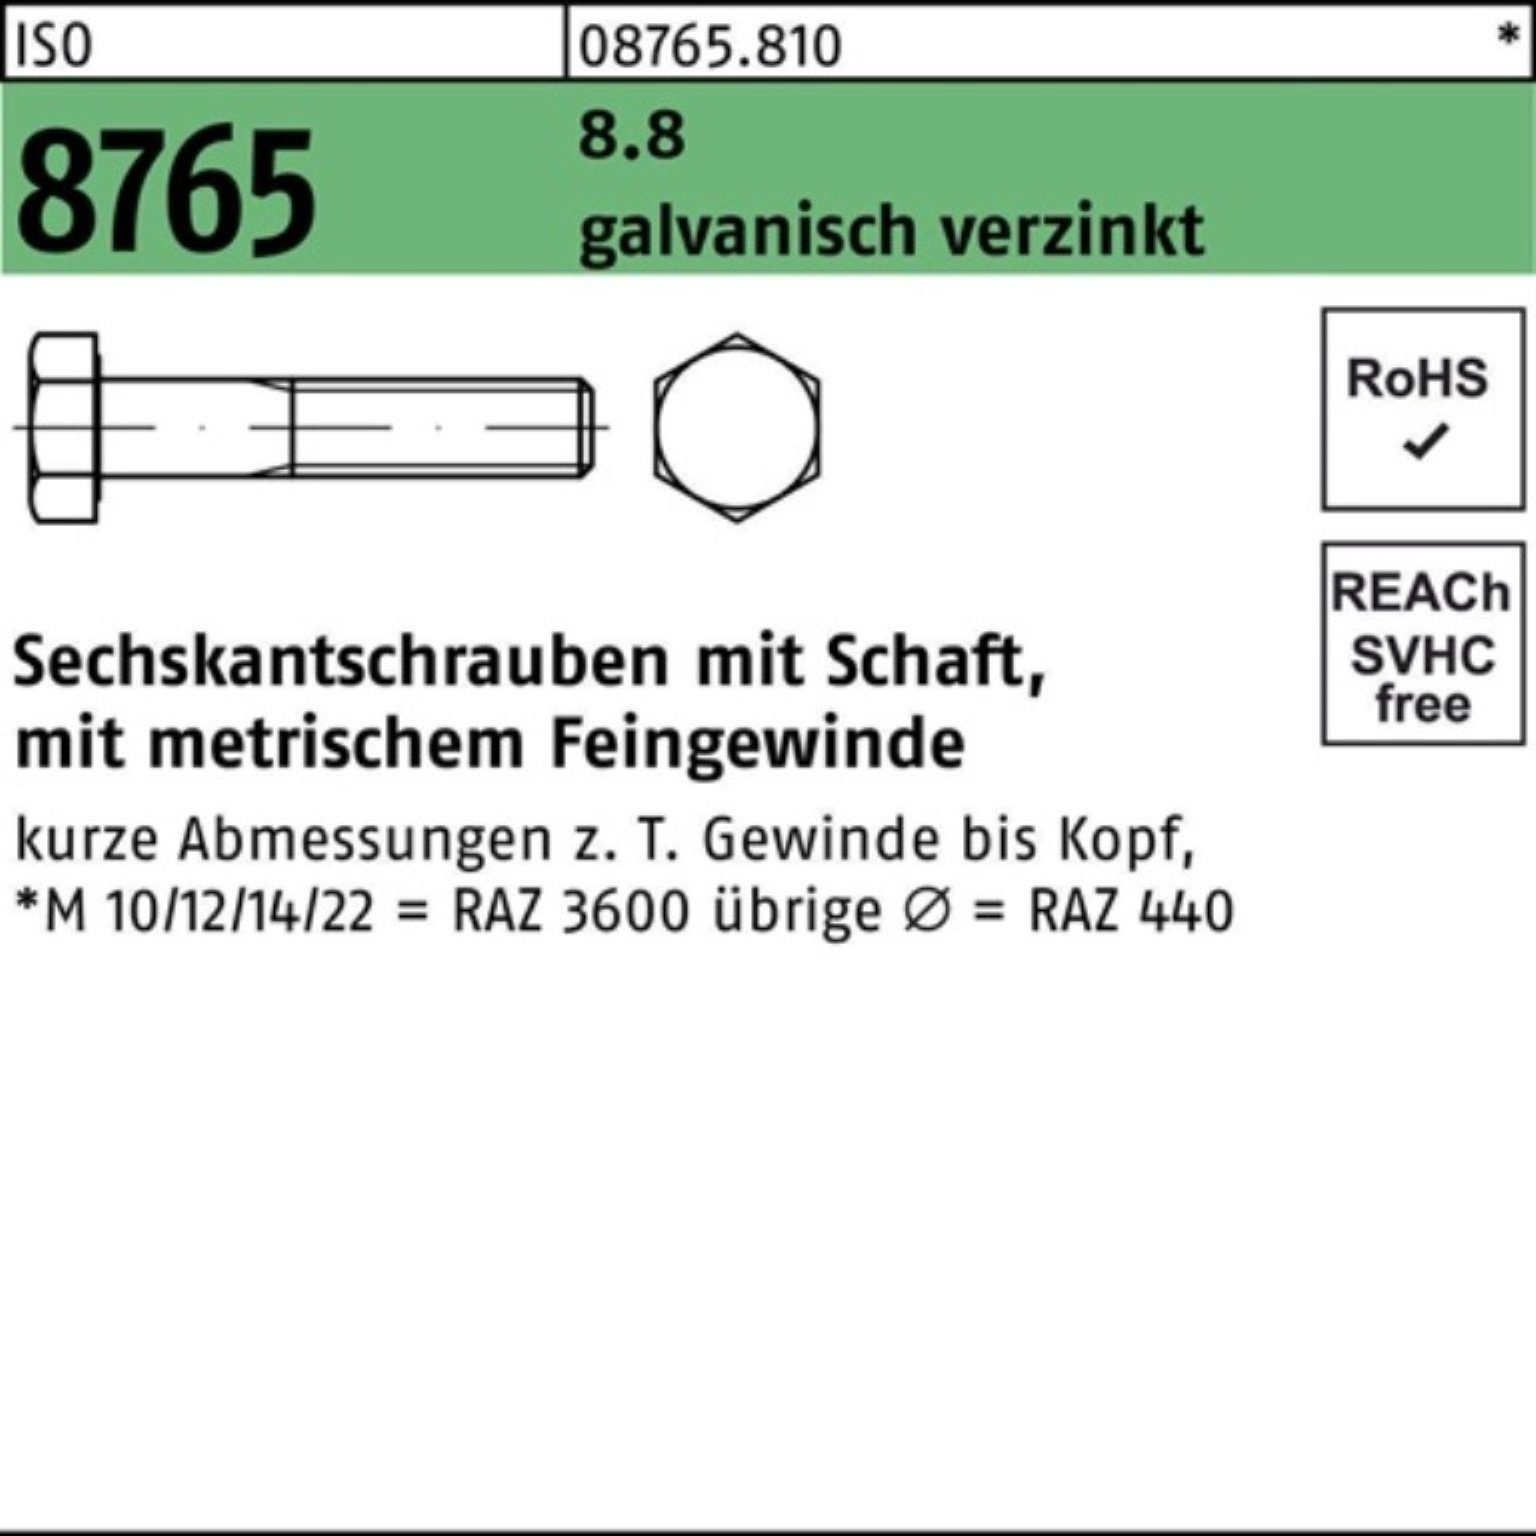 Reyher Sechskantschraube 100er Pack 8.8 Schaft galv.verz M20x1,5x120 Sechskantschraube 8765 ISO